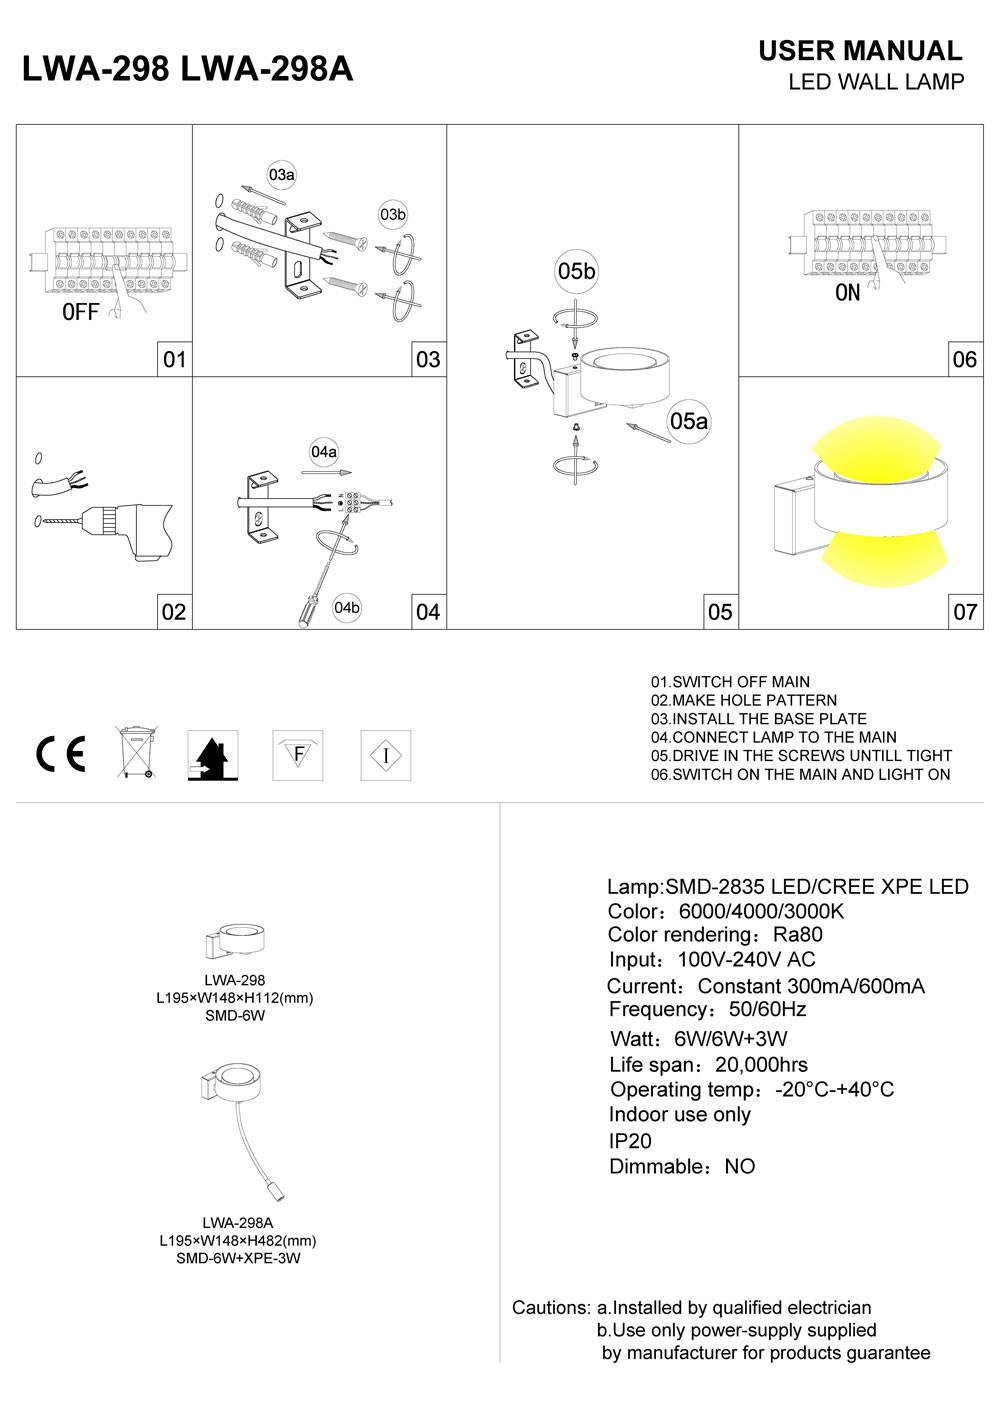 LWA298 LED bedroom wall light installation guide